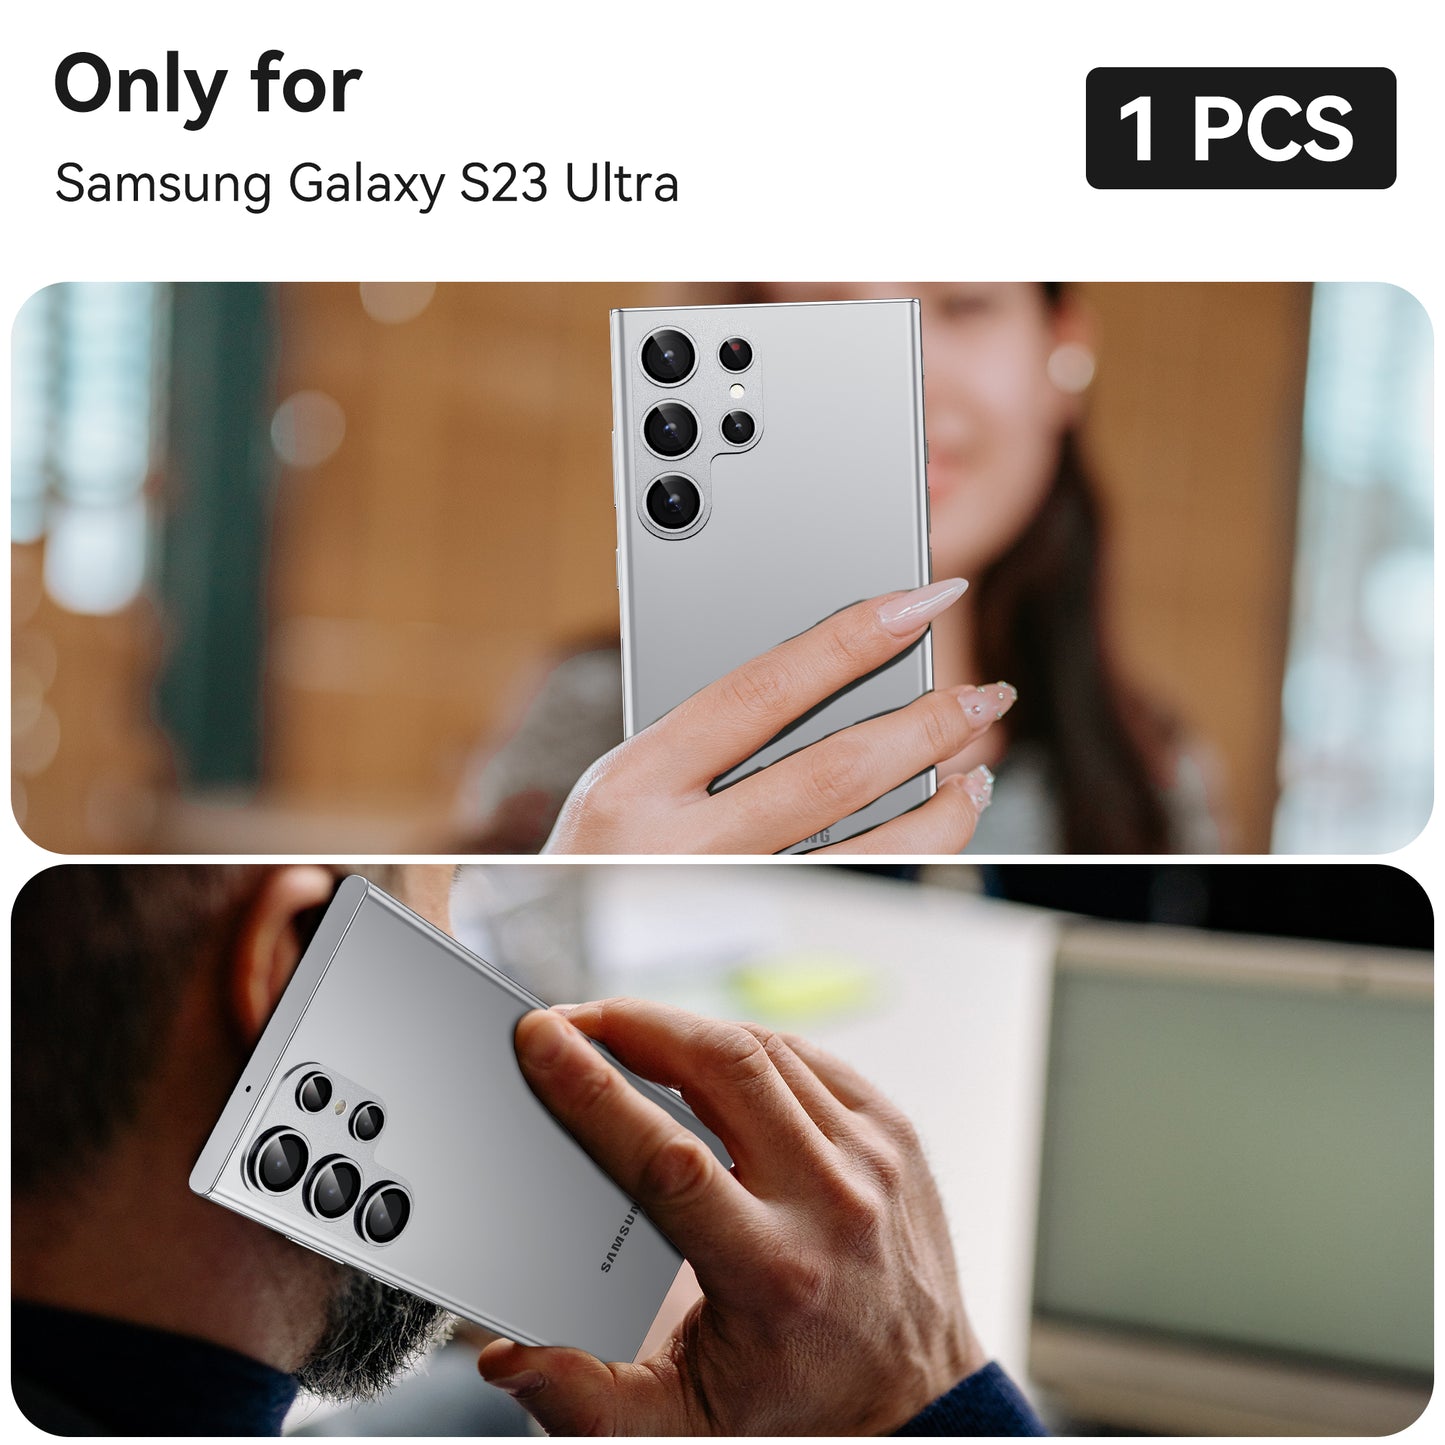 Mansoorr for Samsung Galaxy S23 Ultra Camera Lens Protector - Silver